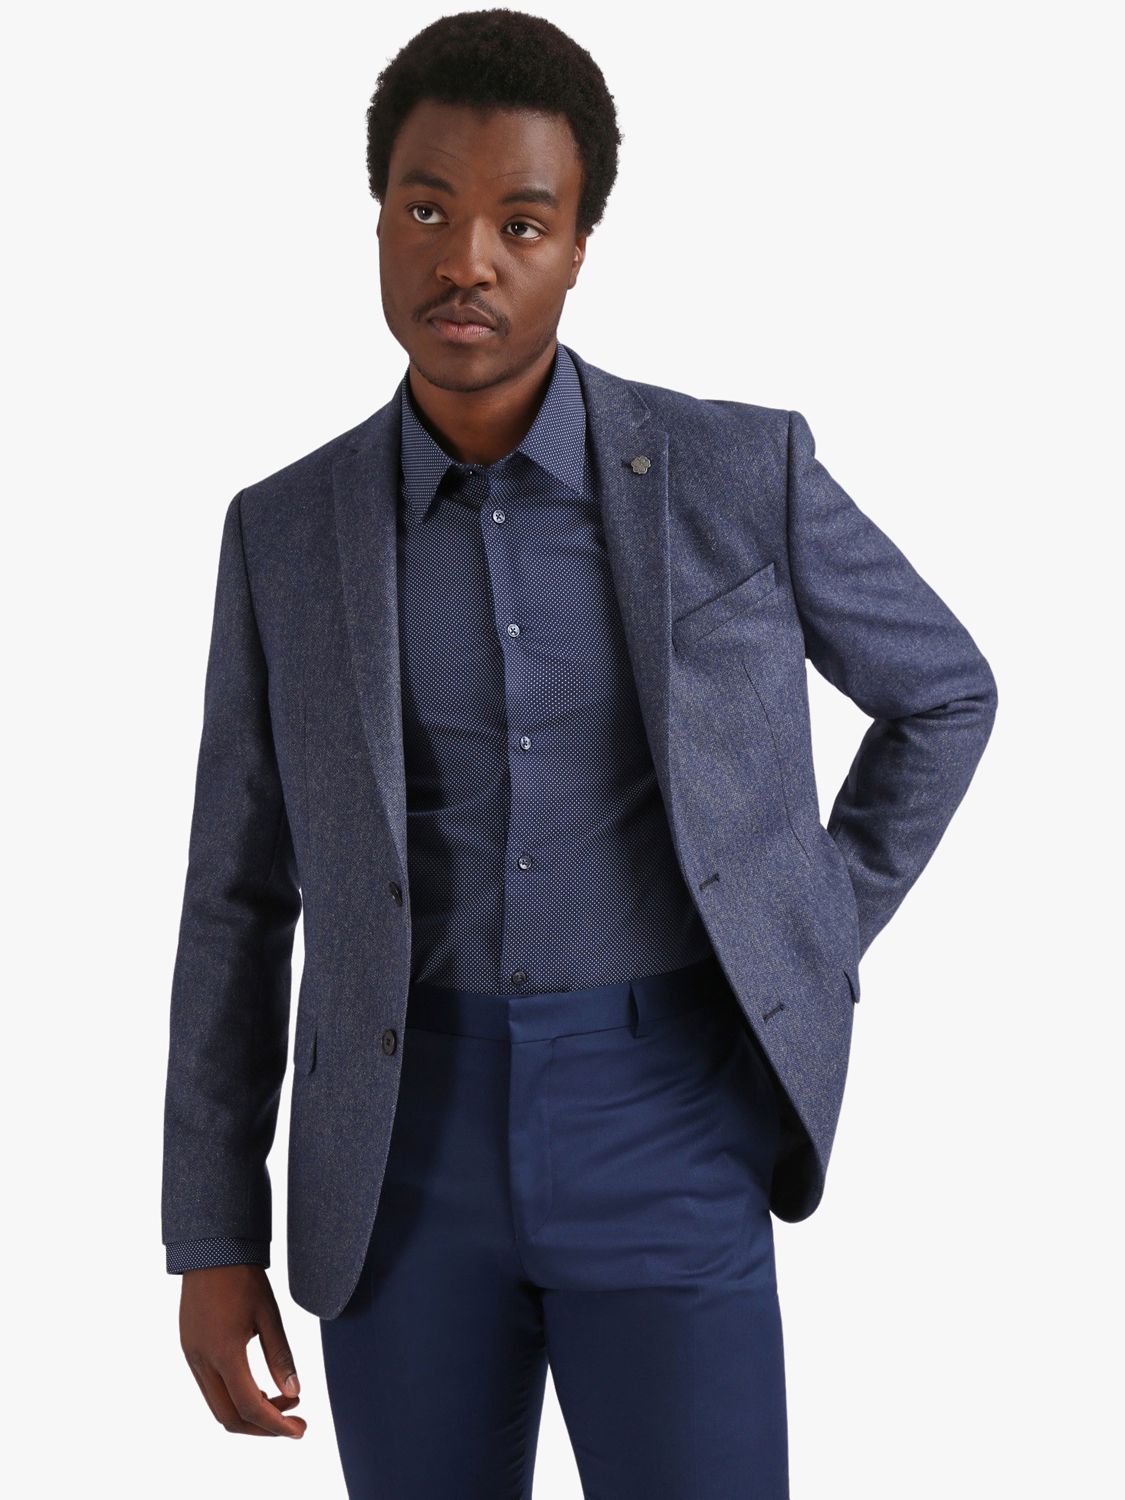 Ted Baker Tian Textured Slim Fit Wool Blend Suit Jacket, Blue, 38R